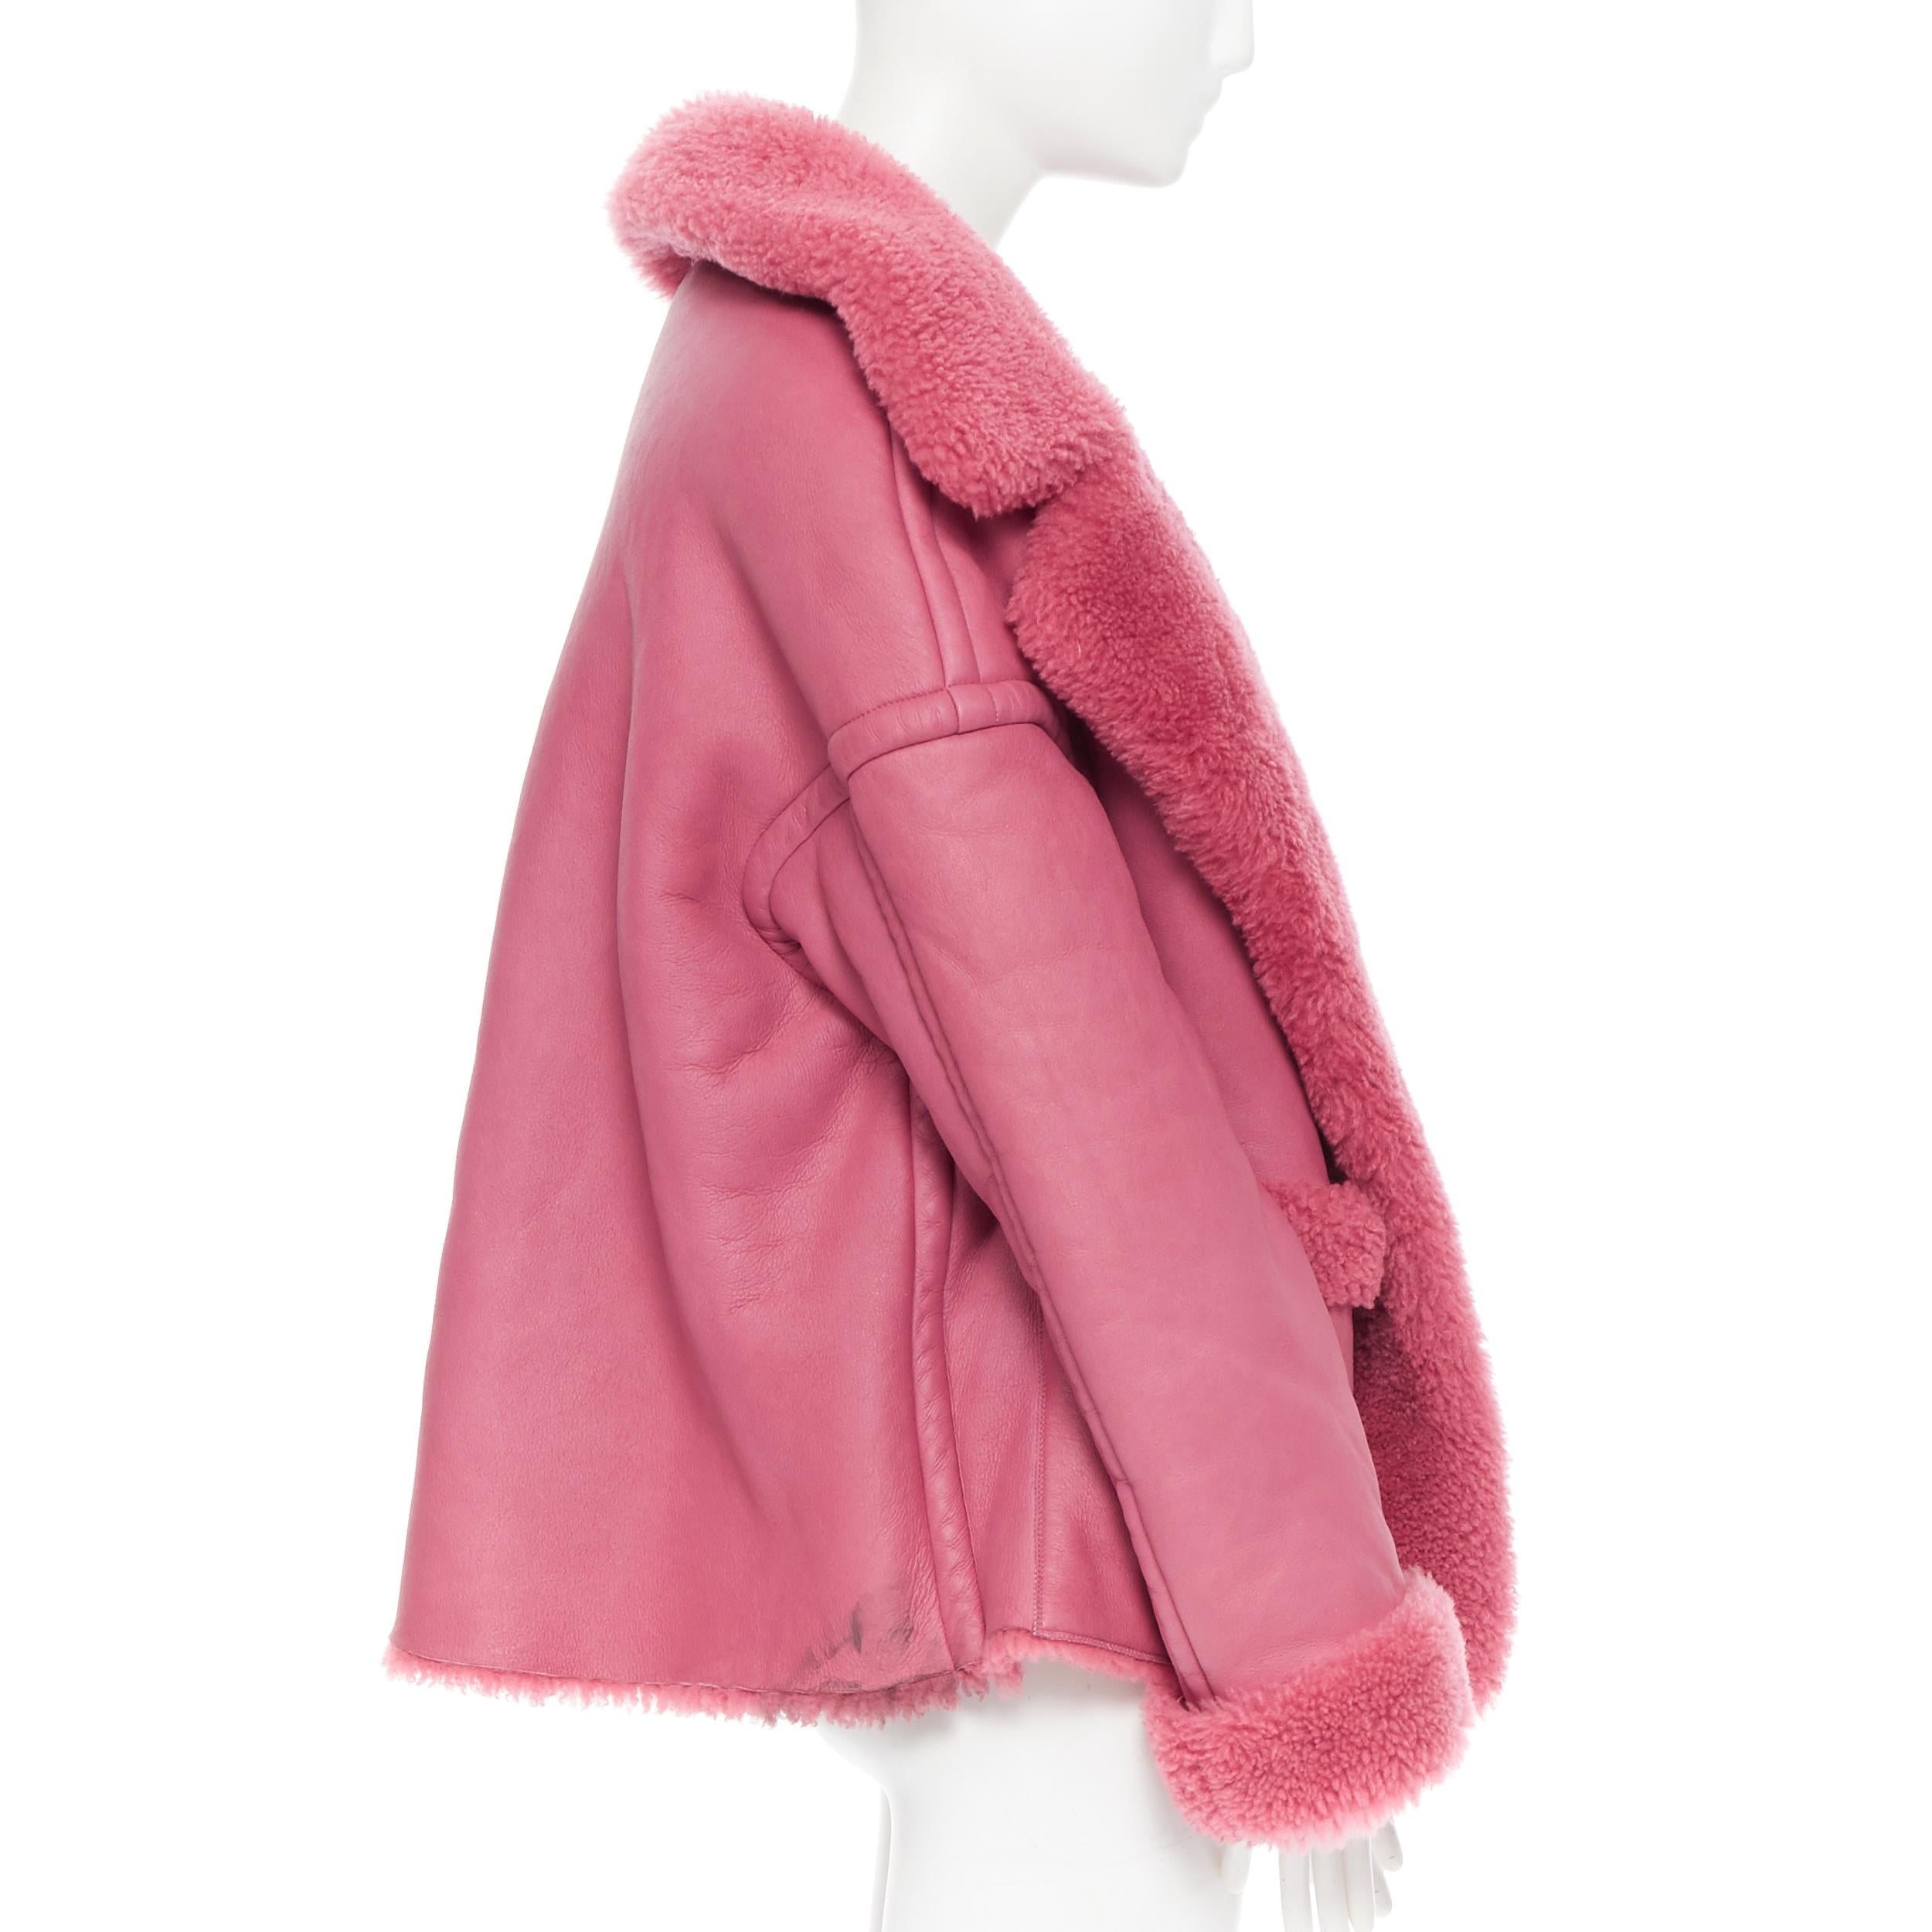 shearling coat pink